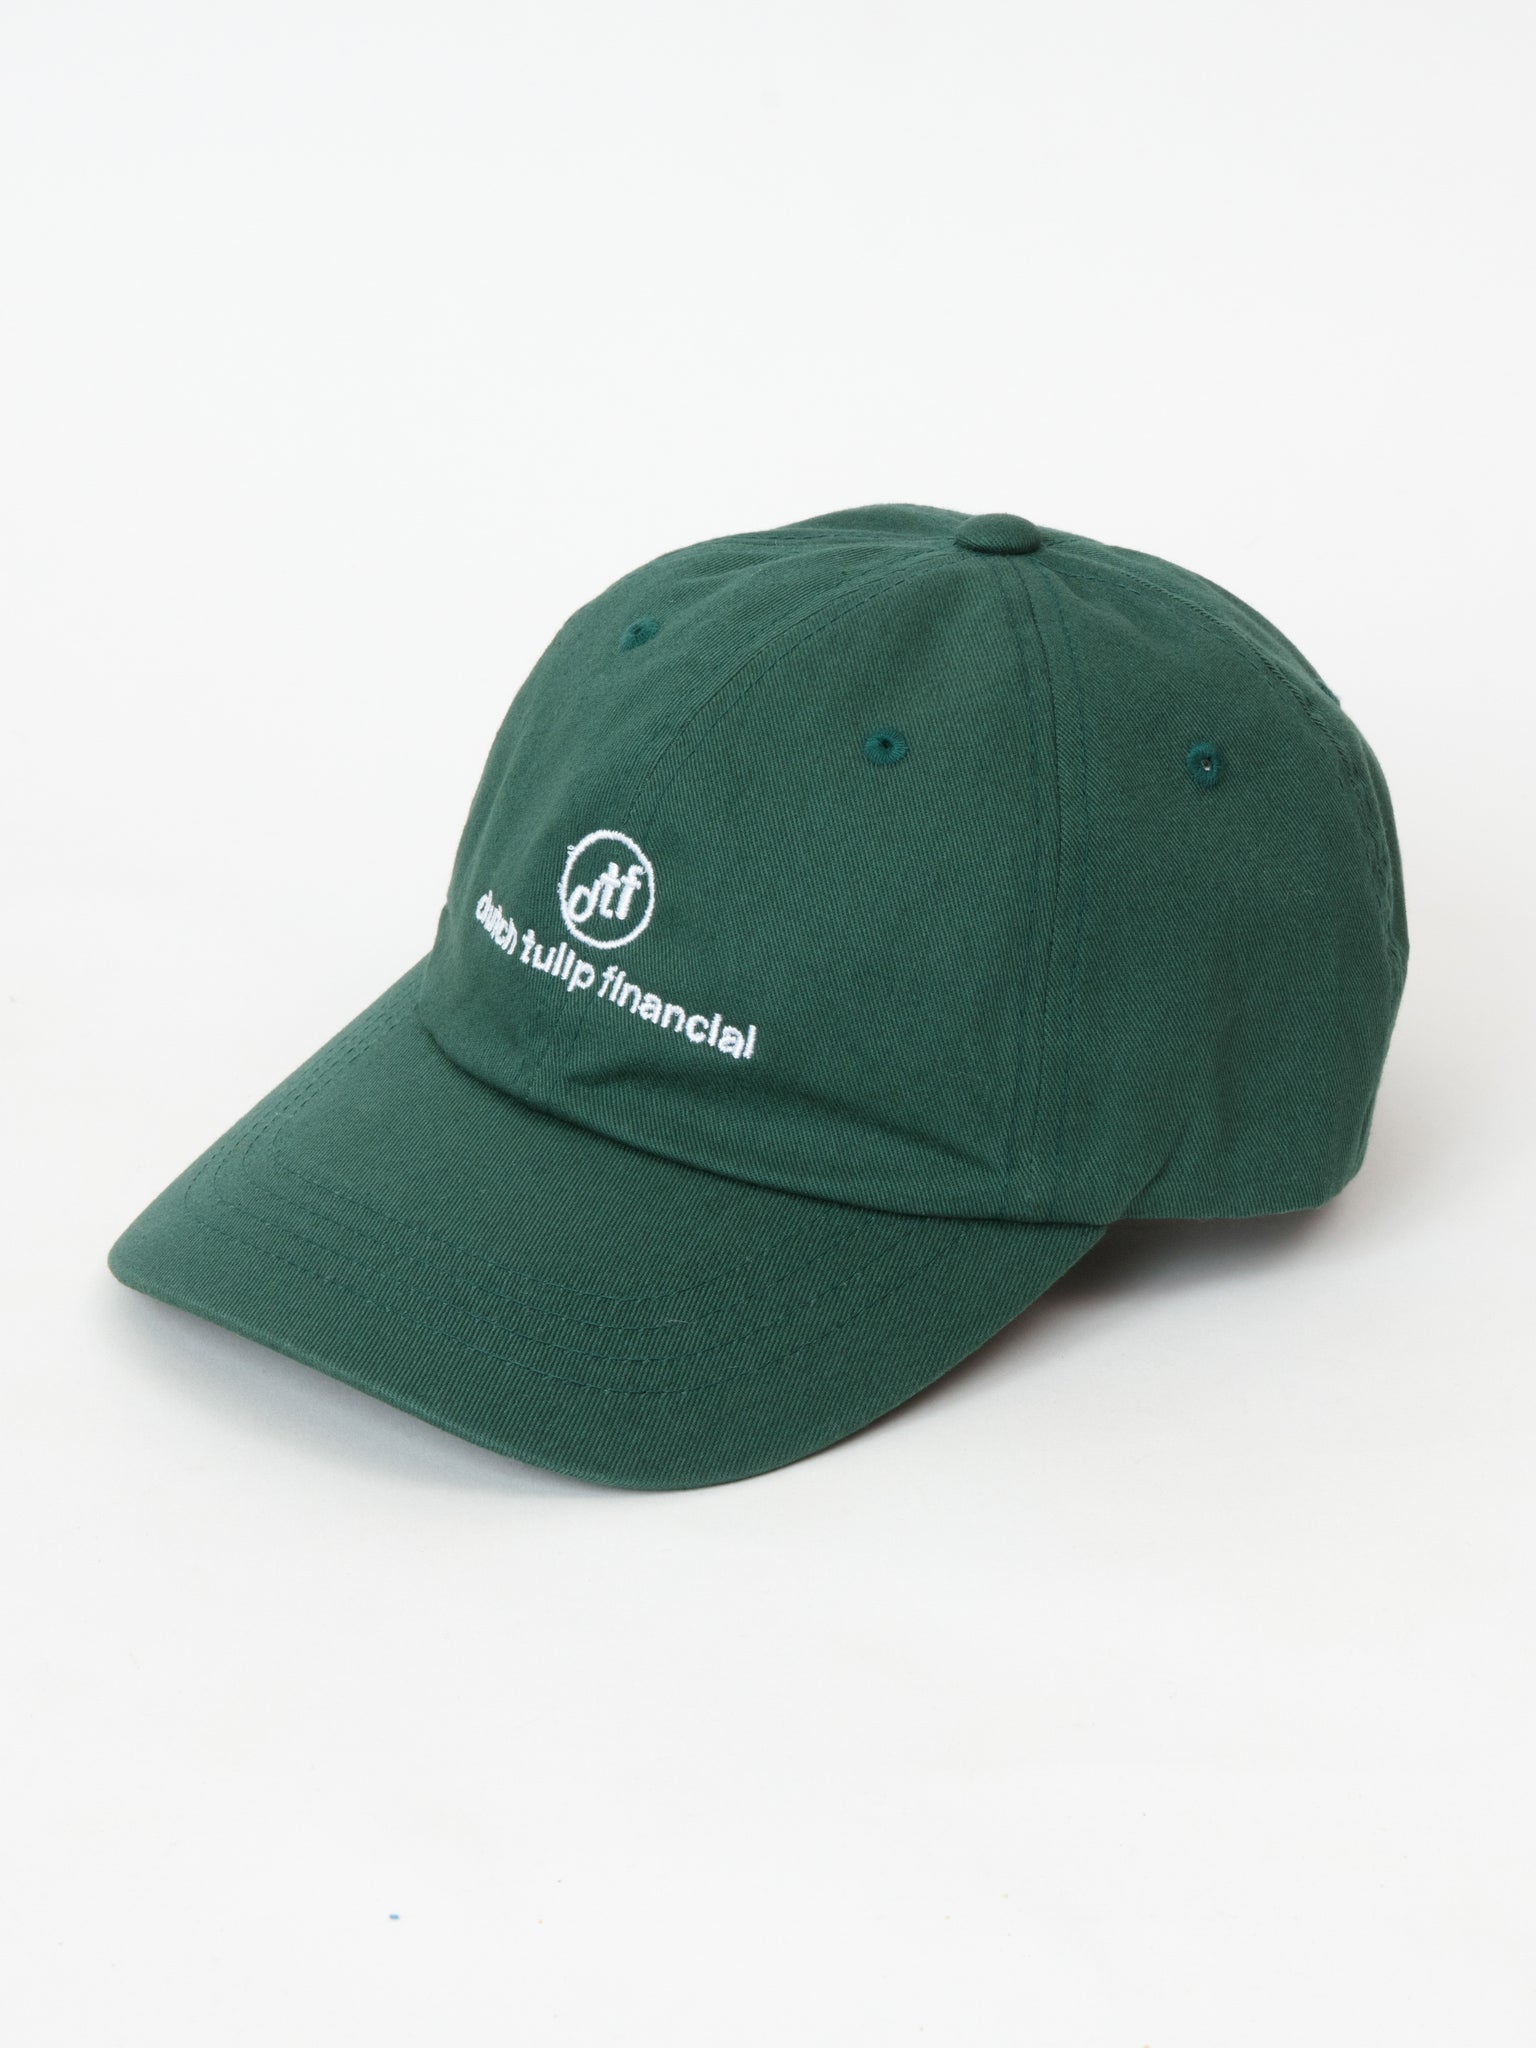 Corporate Logo Cap - Green